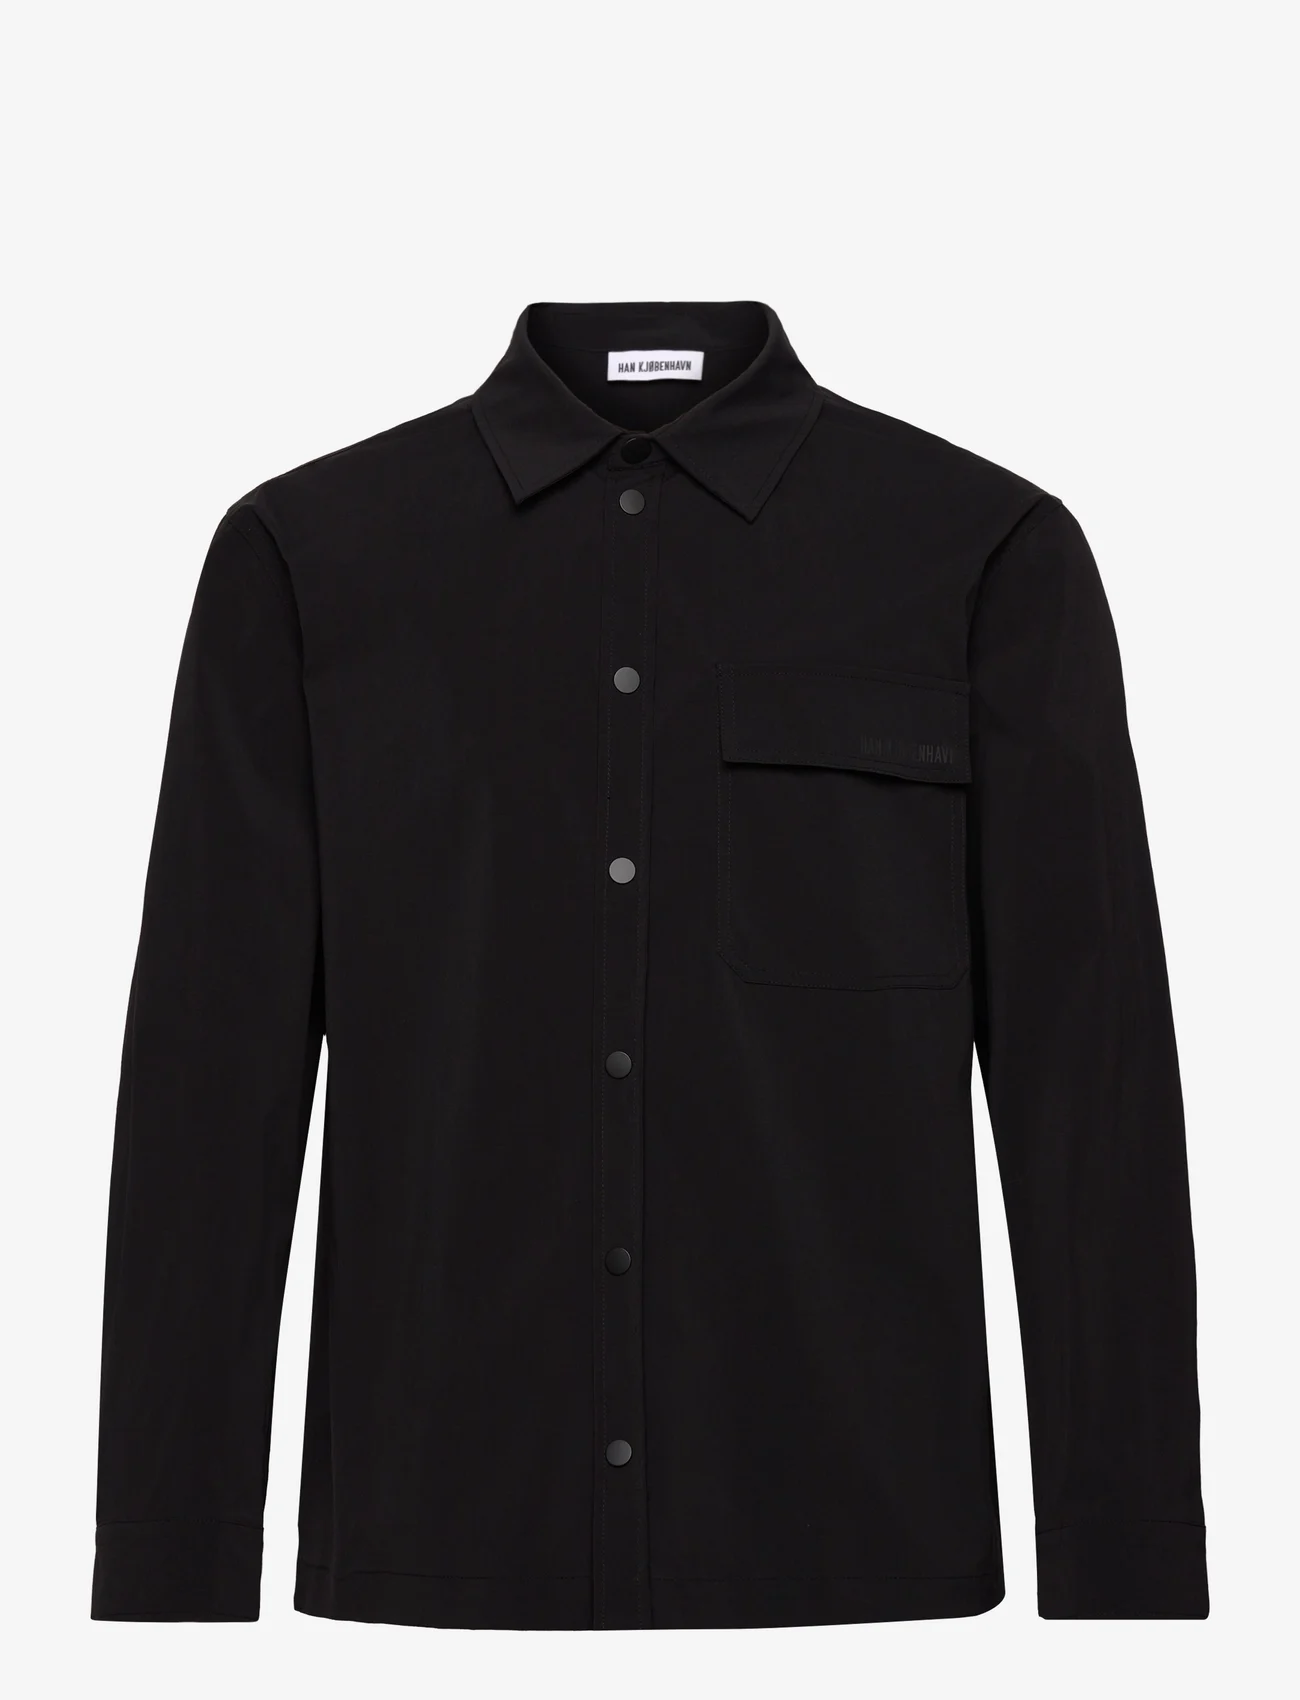 HAN Kjøbenhavn - Nylon Patch Pocket Shirt Long Sleeve - mężczyźni - black - 0